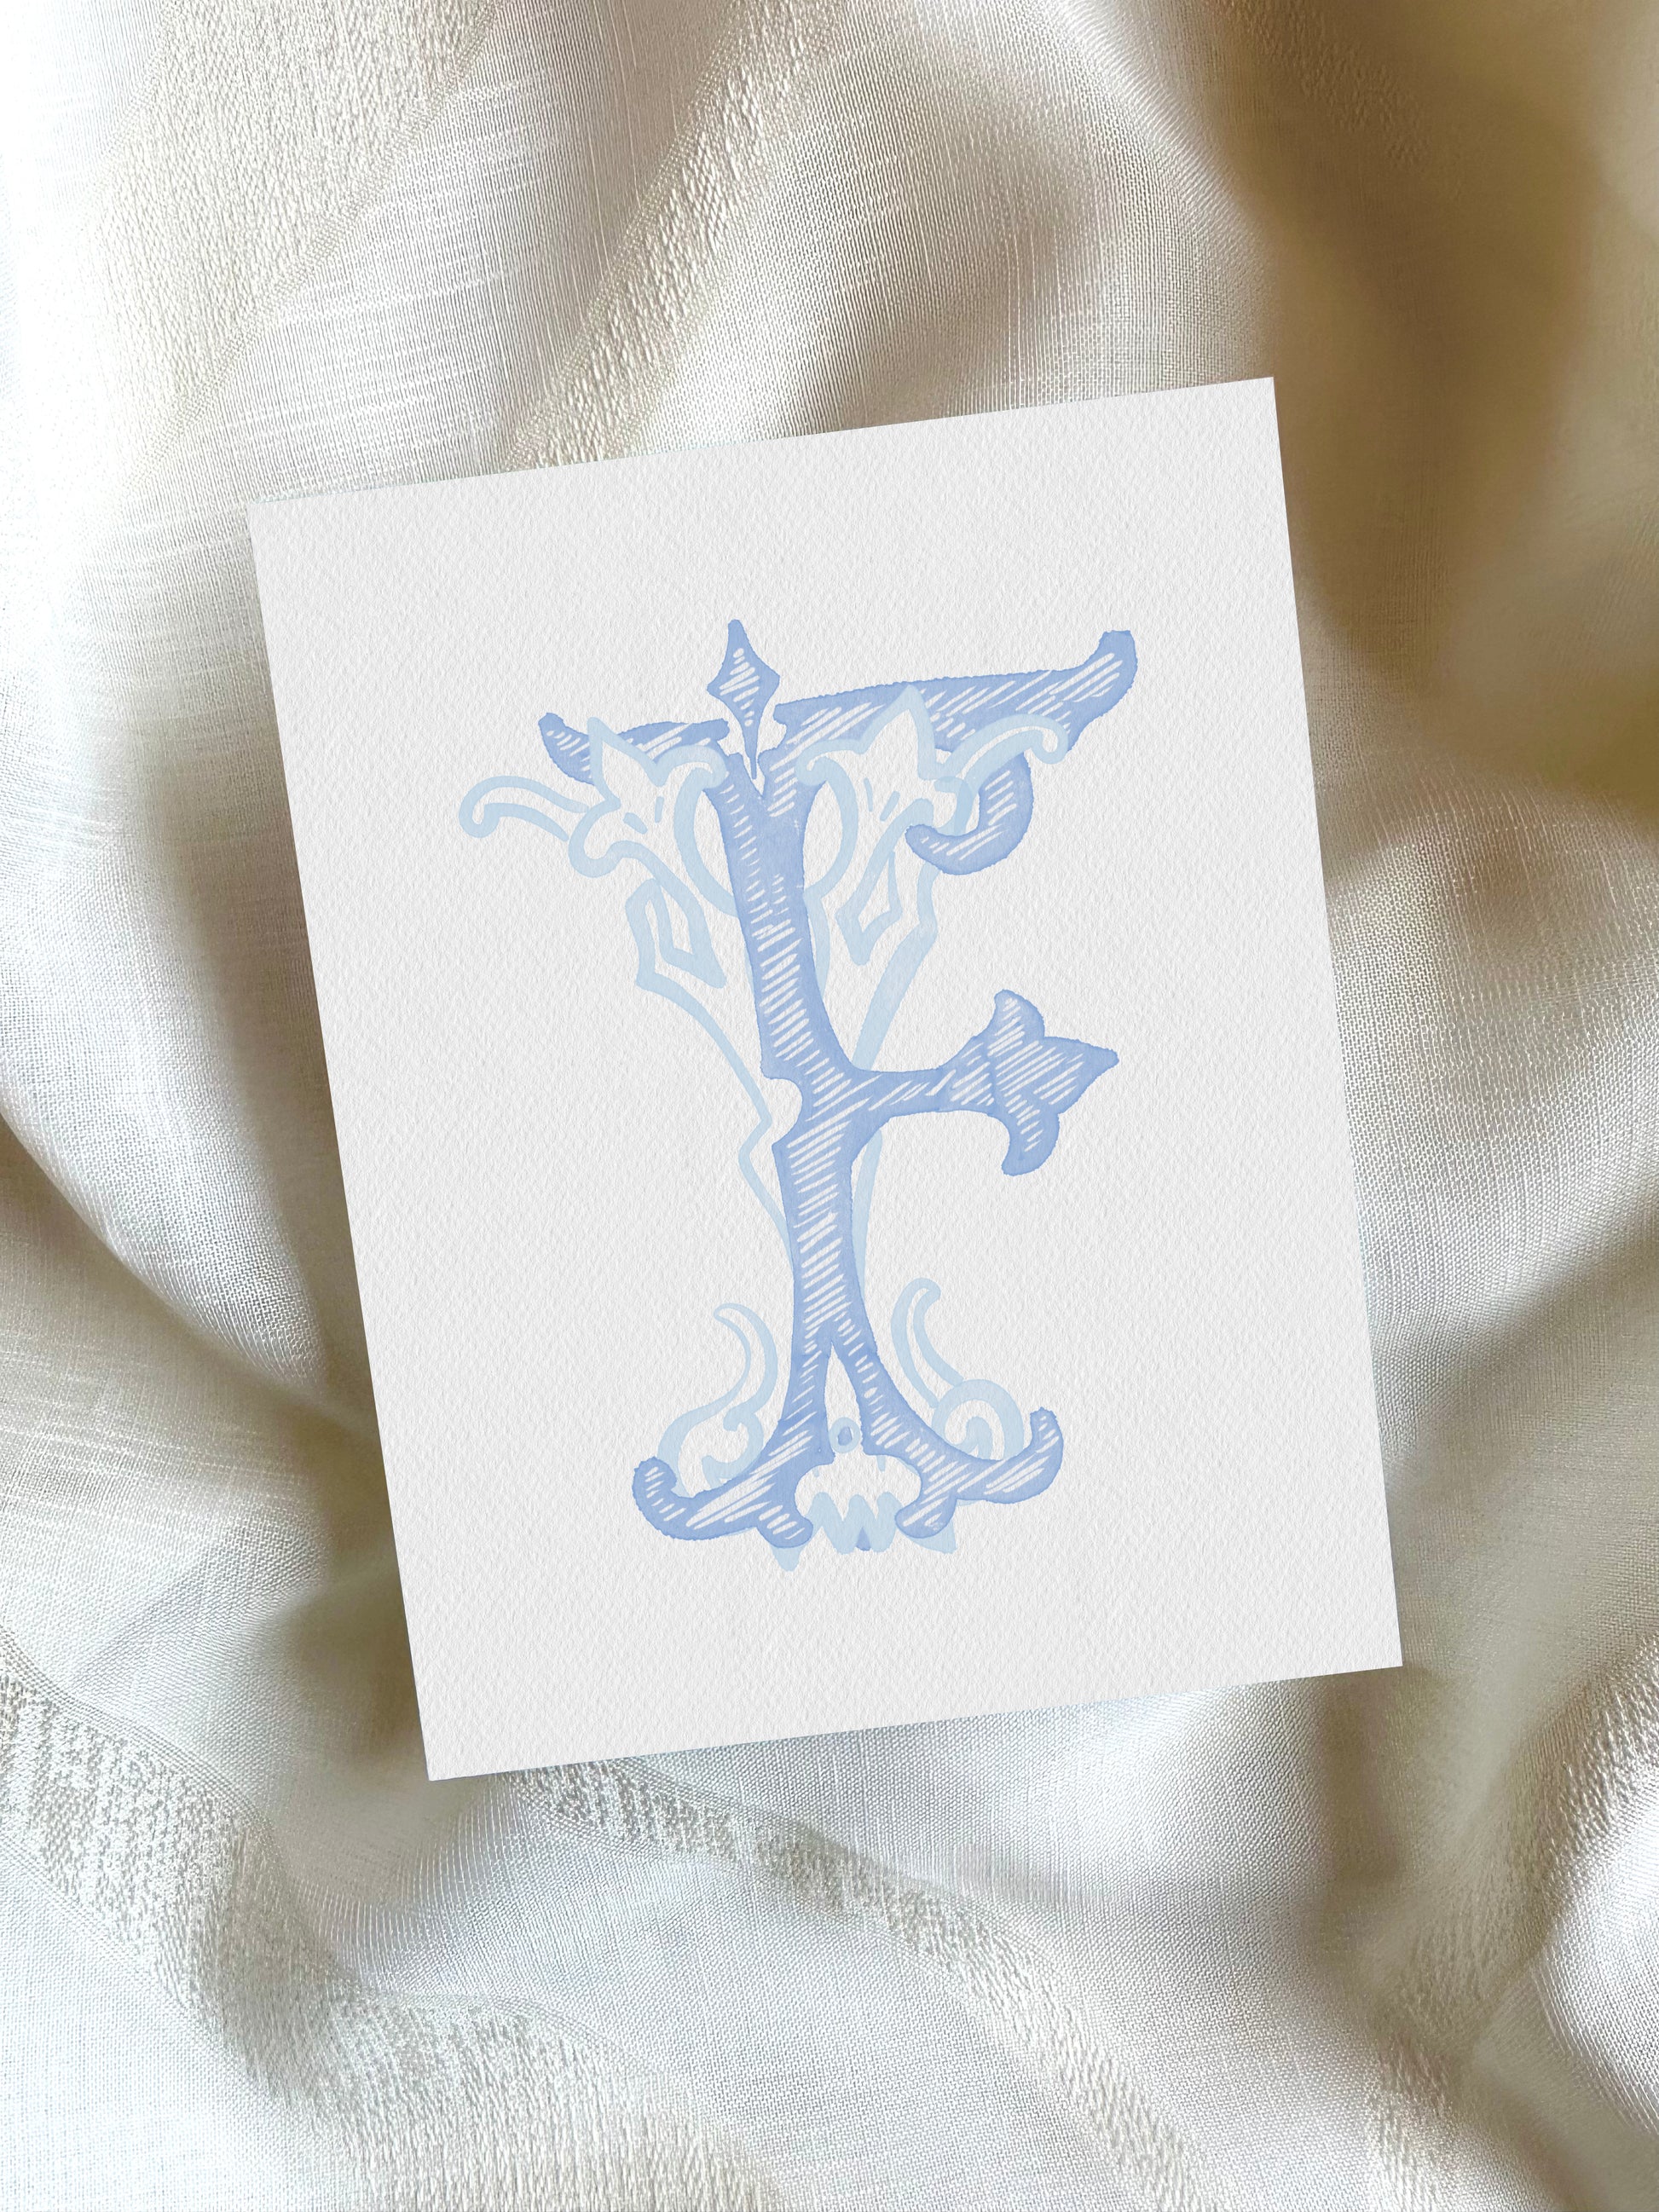 2 Letter Monogram with Letters FY YF | Digital Download - Wedding Monogram SVG, Personal Logo, Wedding Logo for Wedding Invitations The Wedding Crest Lab